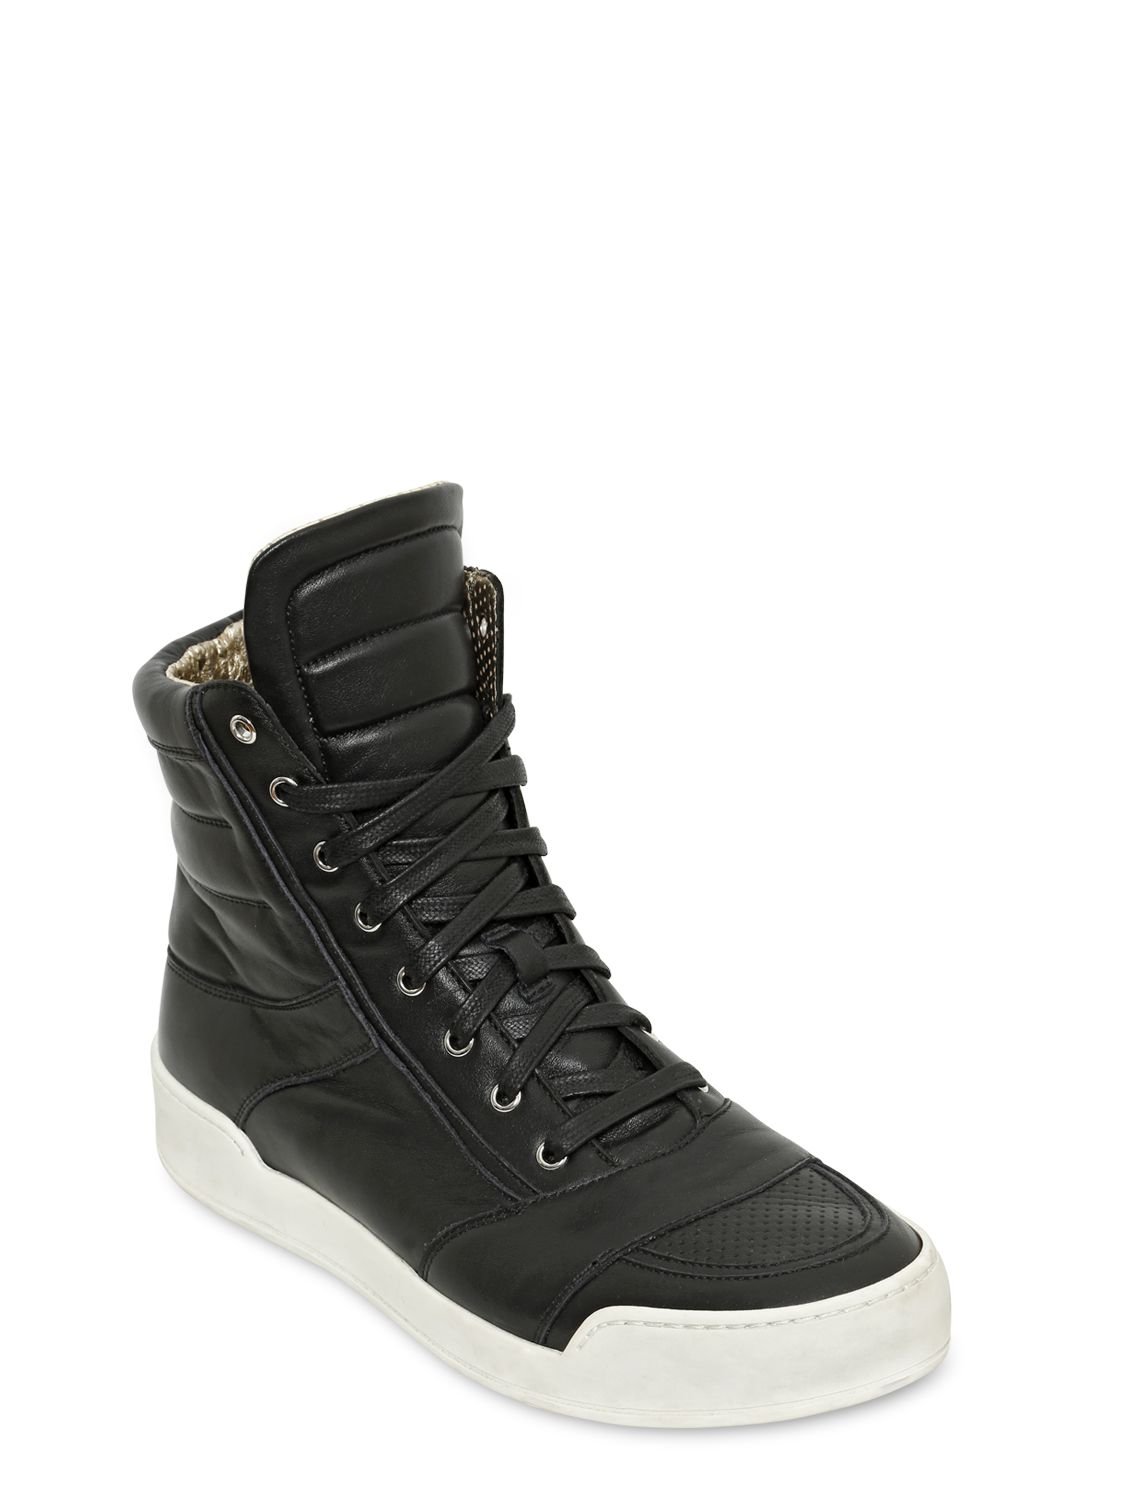 Lyst - Balmain Leather High Top Sneakers in Black for Men